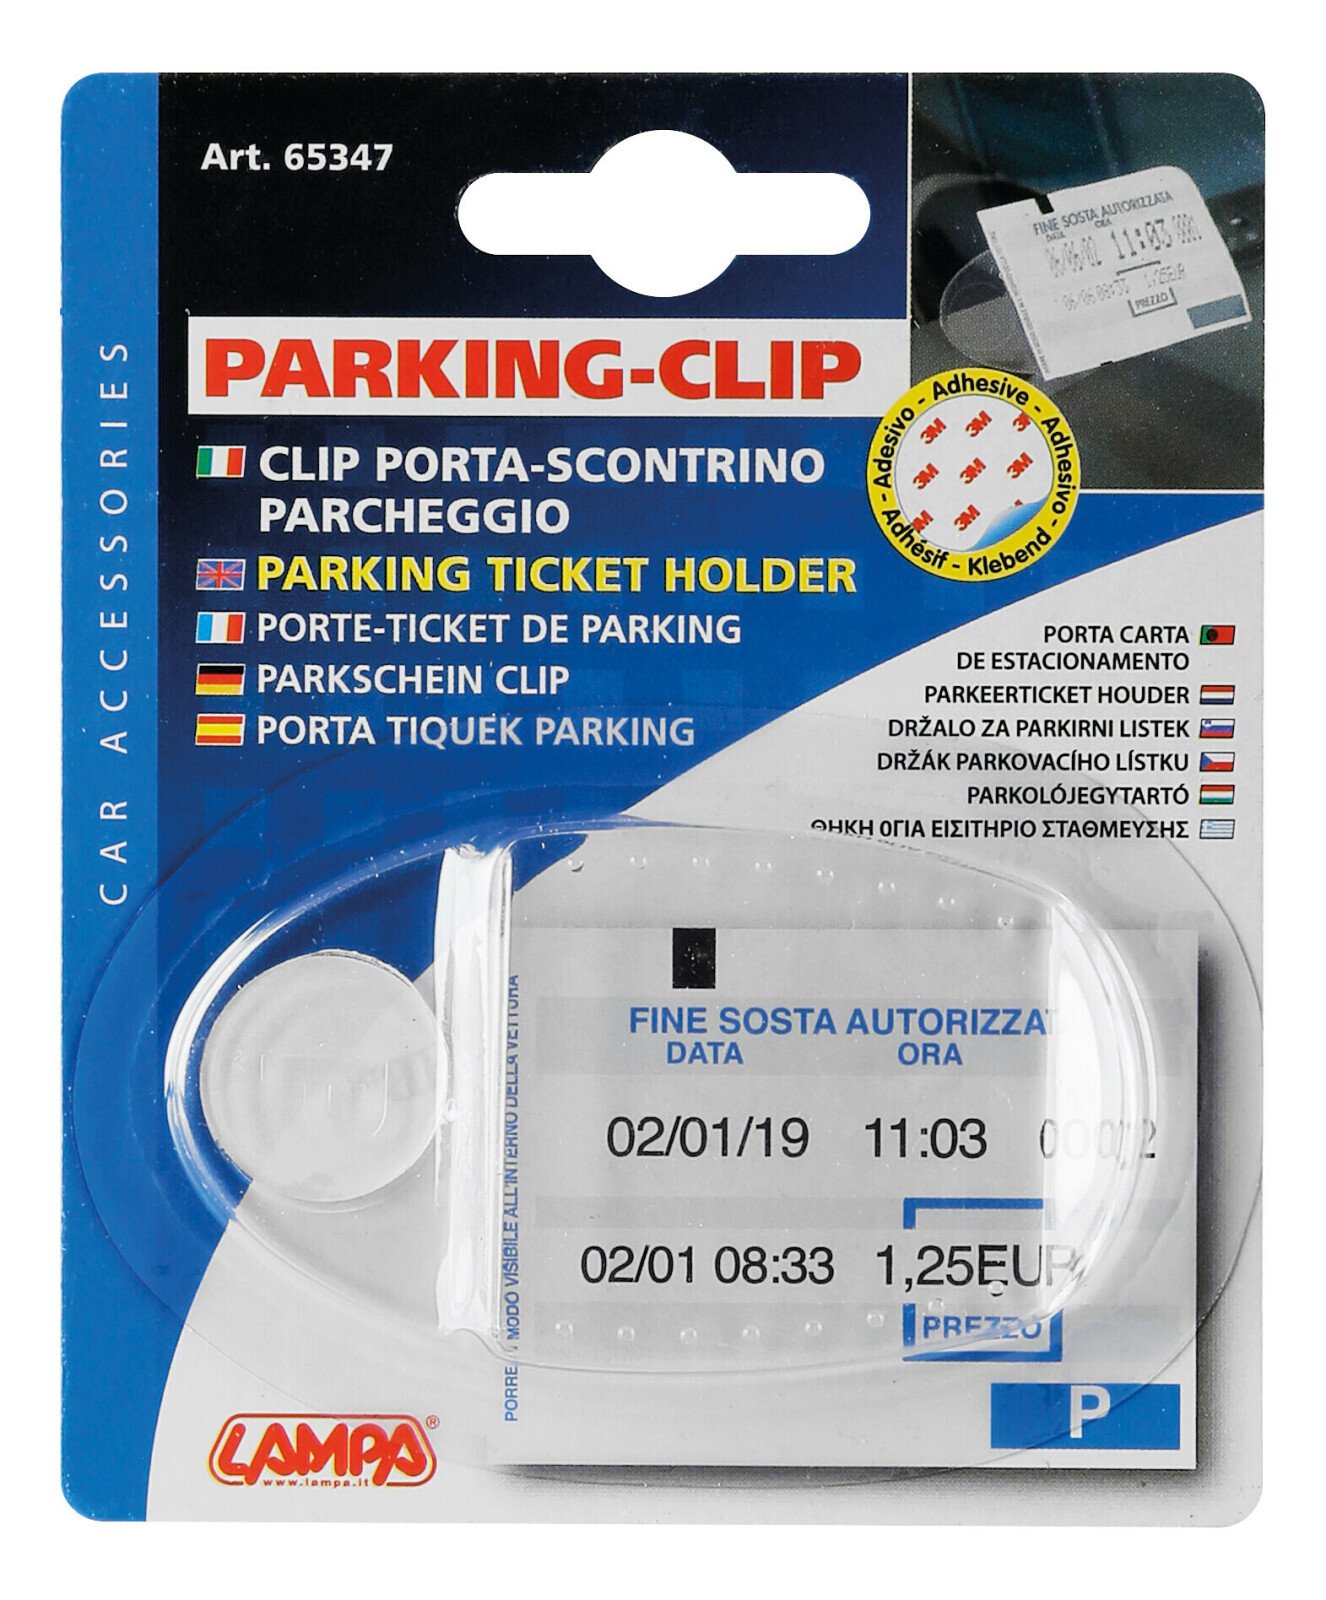 Parking ticket holder thumb